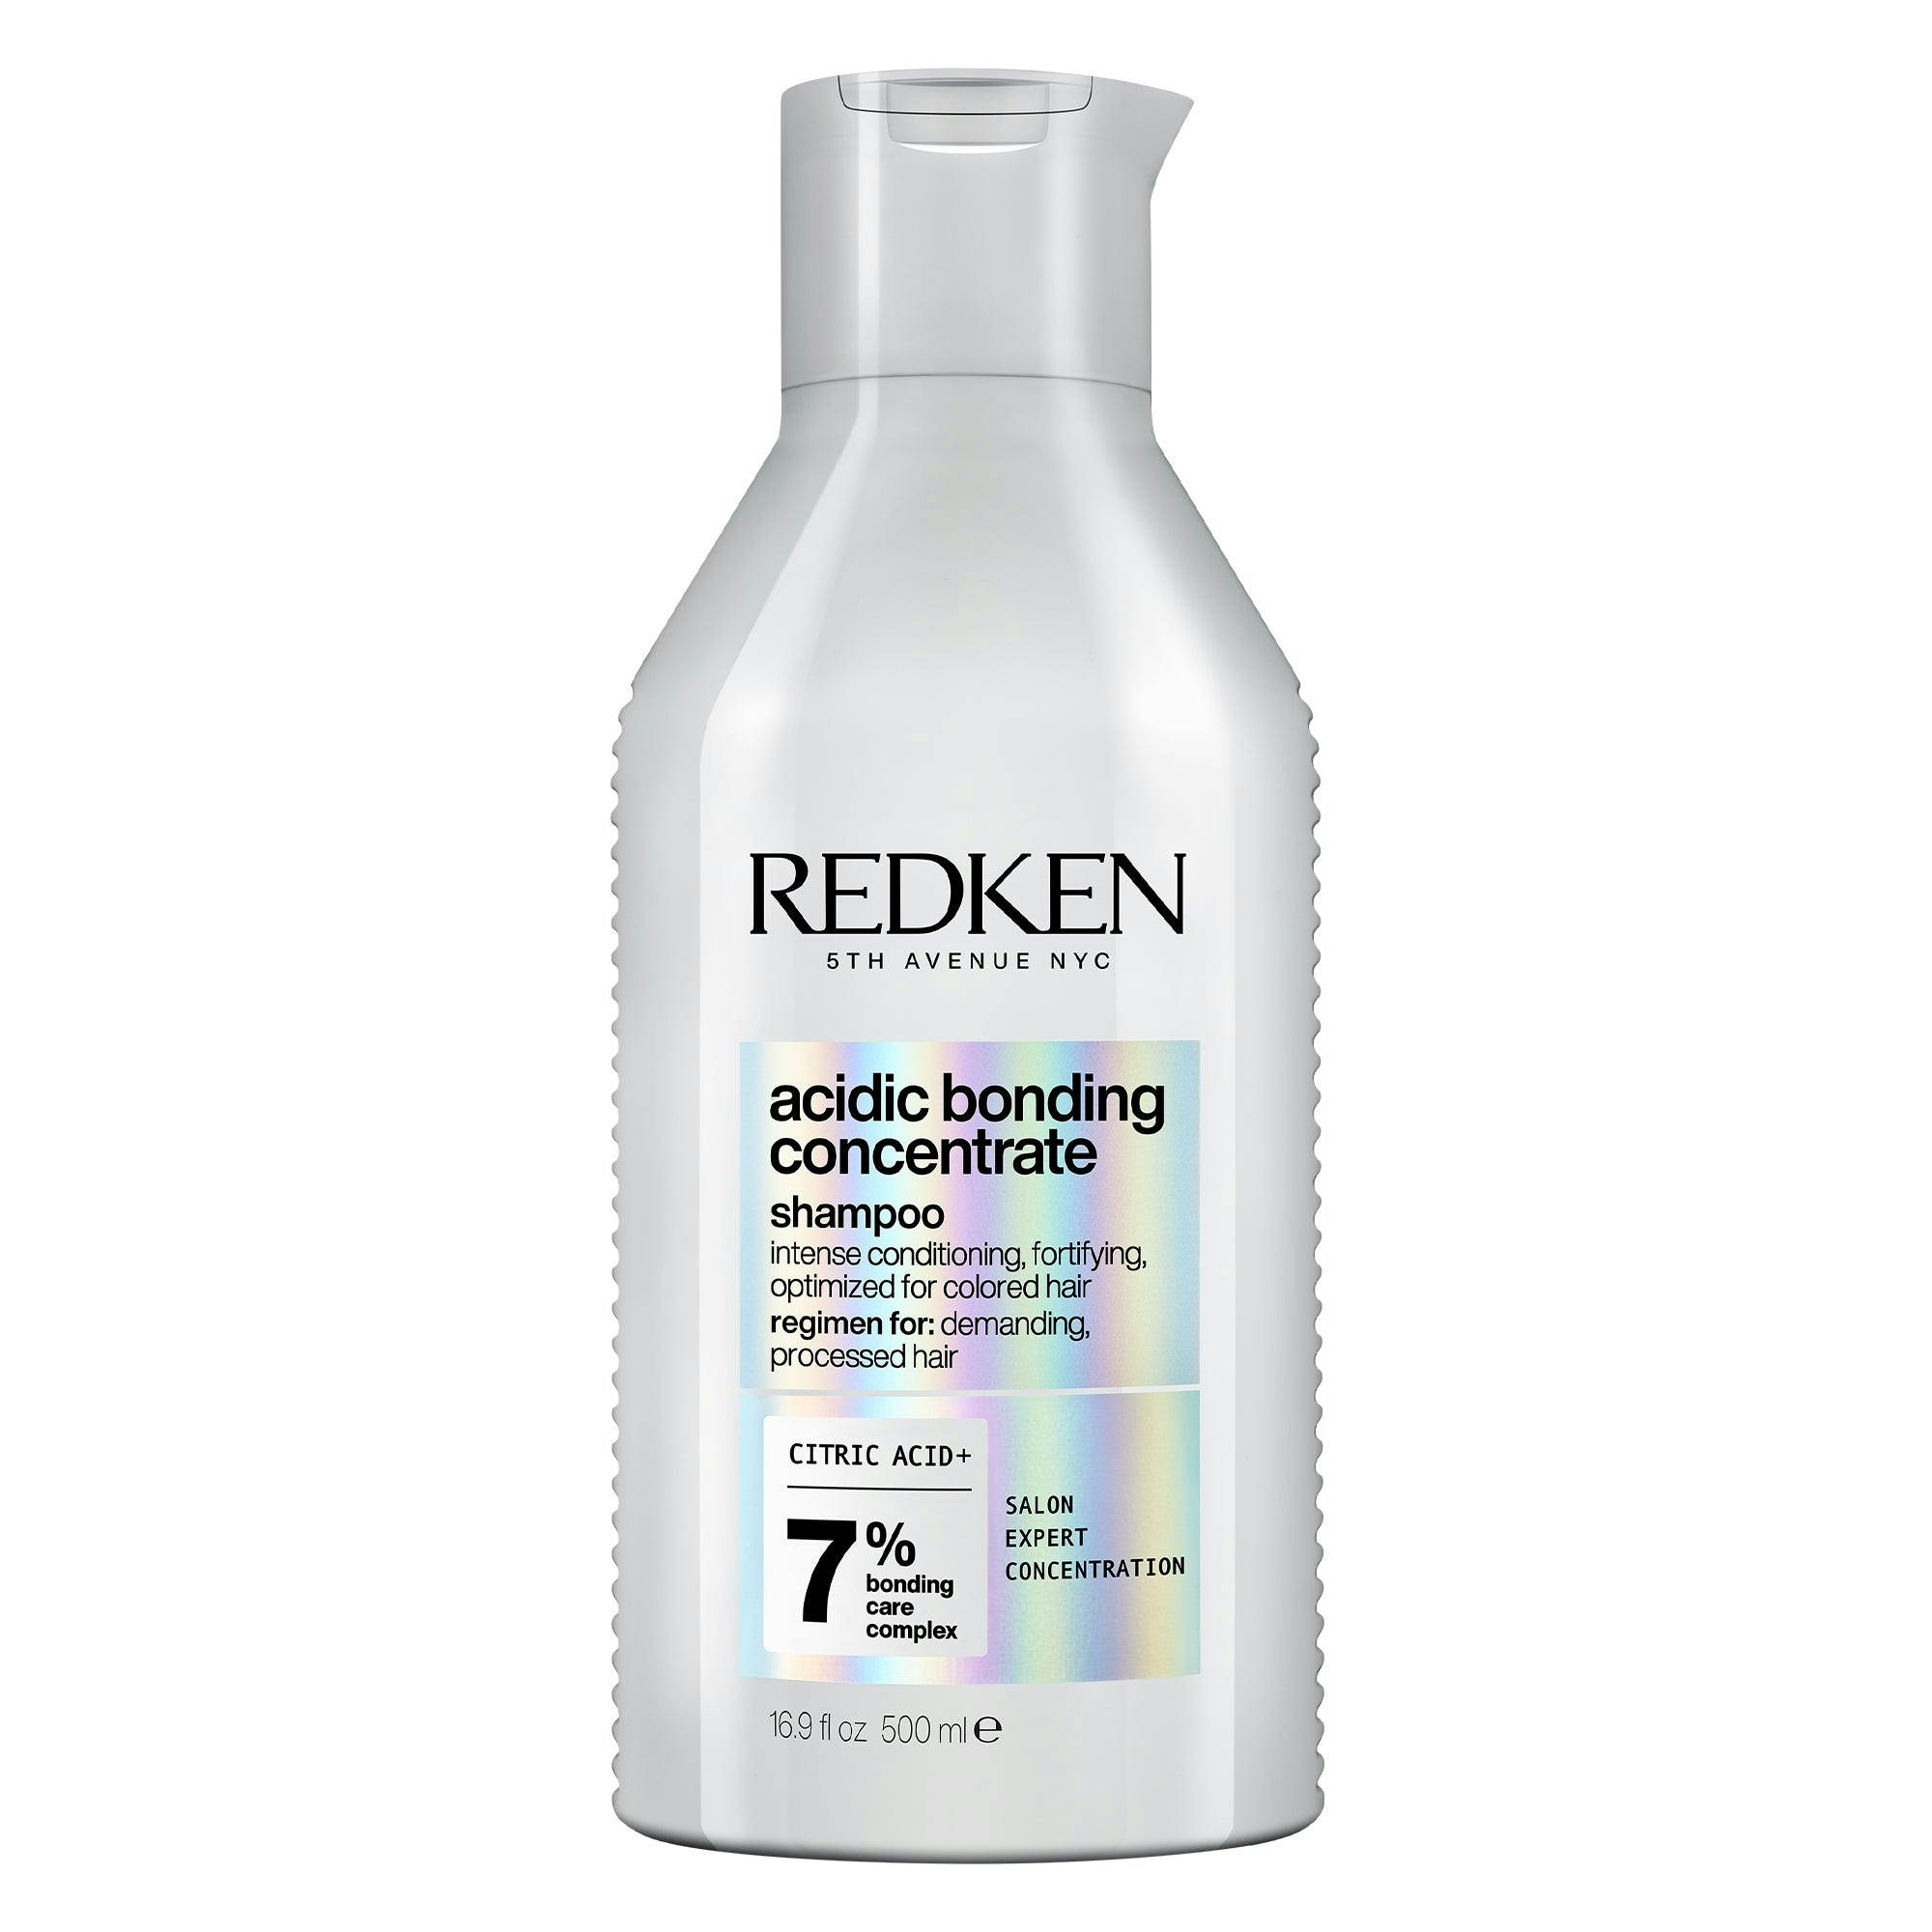 Redken Acidic Bonding Concentrate Shampoo and Conditioner 500ml Bundle